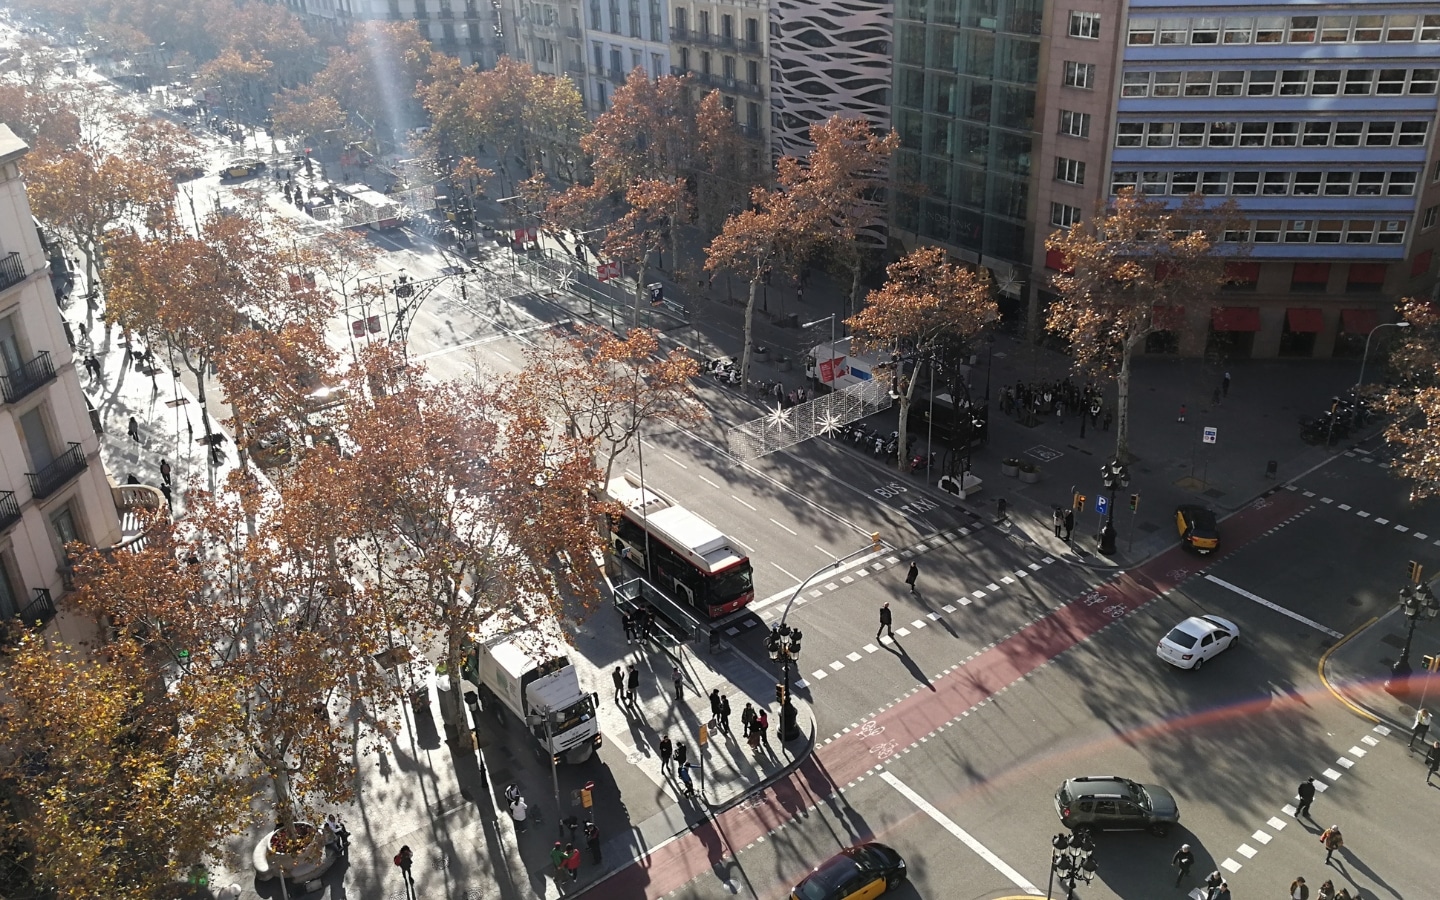 December Weather in Barcelona